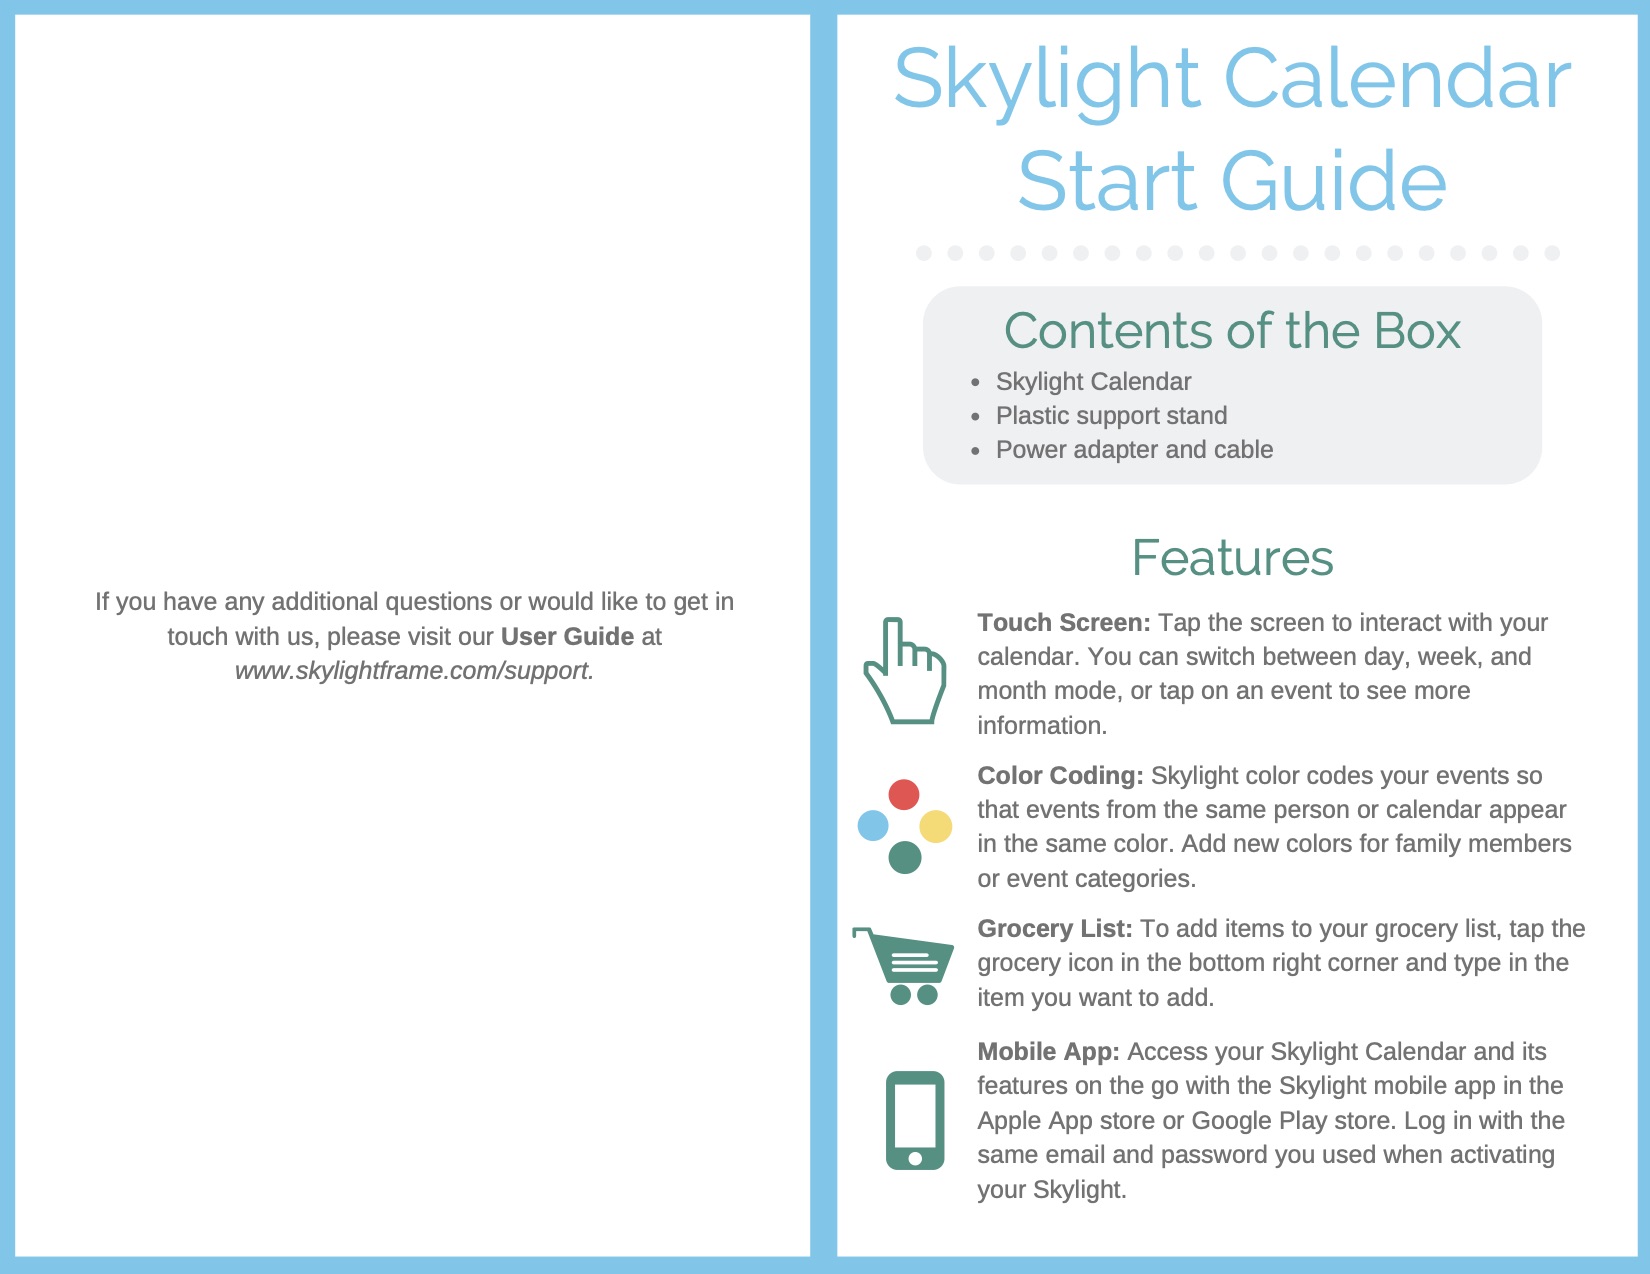 Official_Skylight_Calendar_Start_Guide_2020_Page_1.jpg